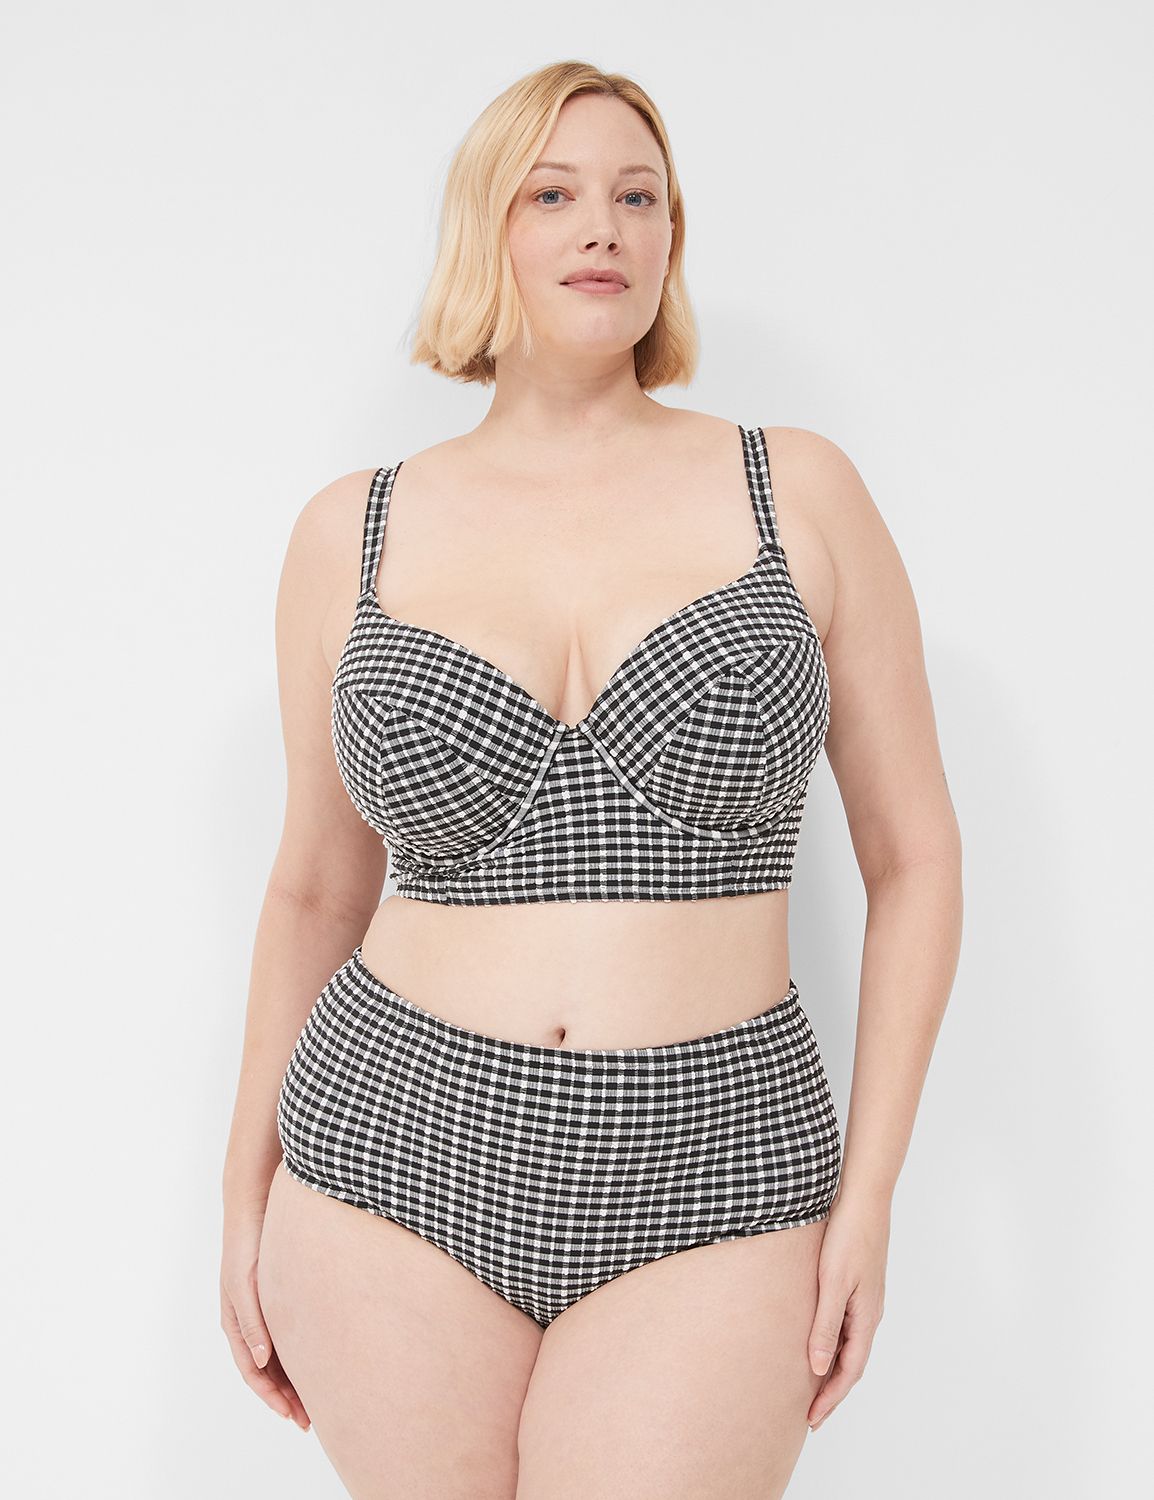 Swimsuits for All Women's Plus Size Leader Bra Sized Underwire Bikini Top -  36 DD, Tropical